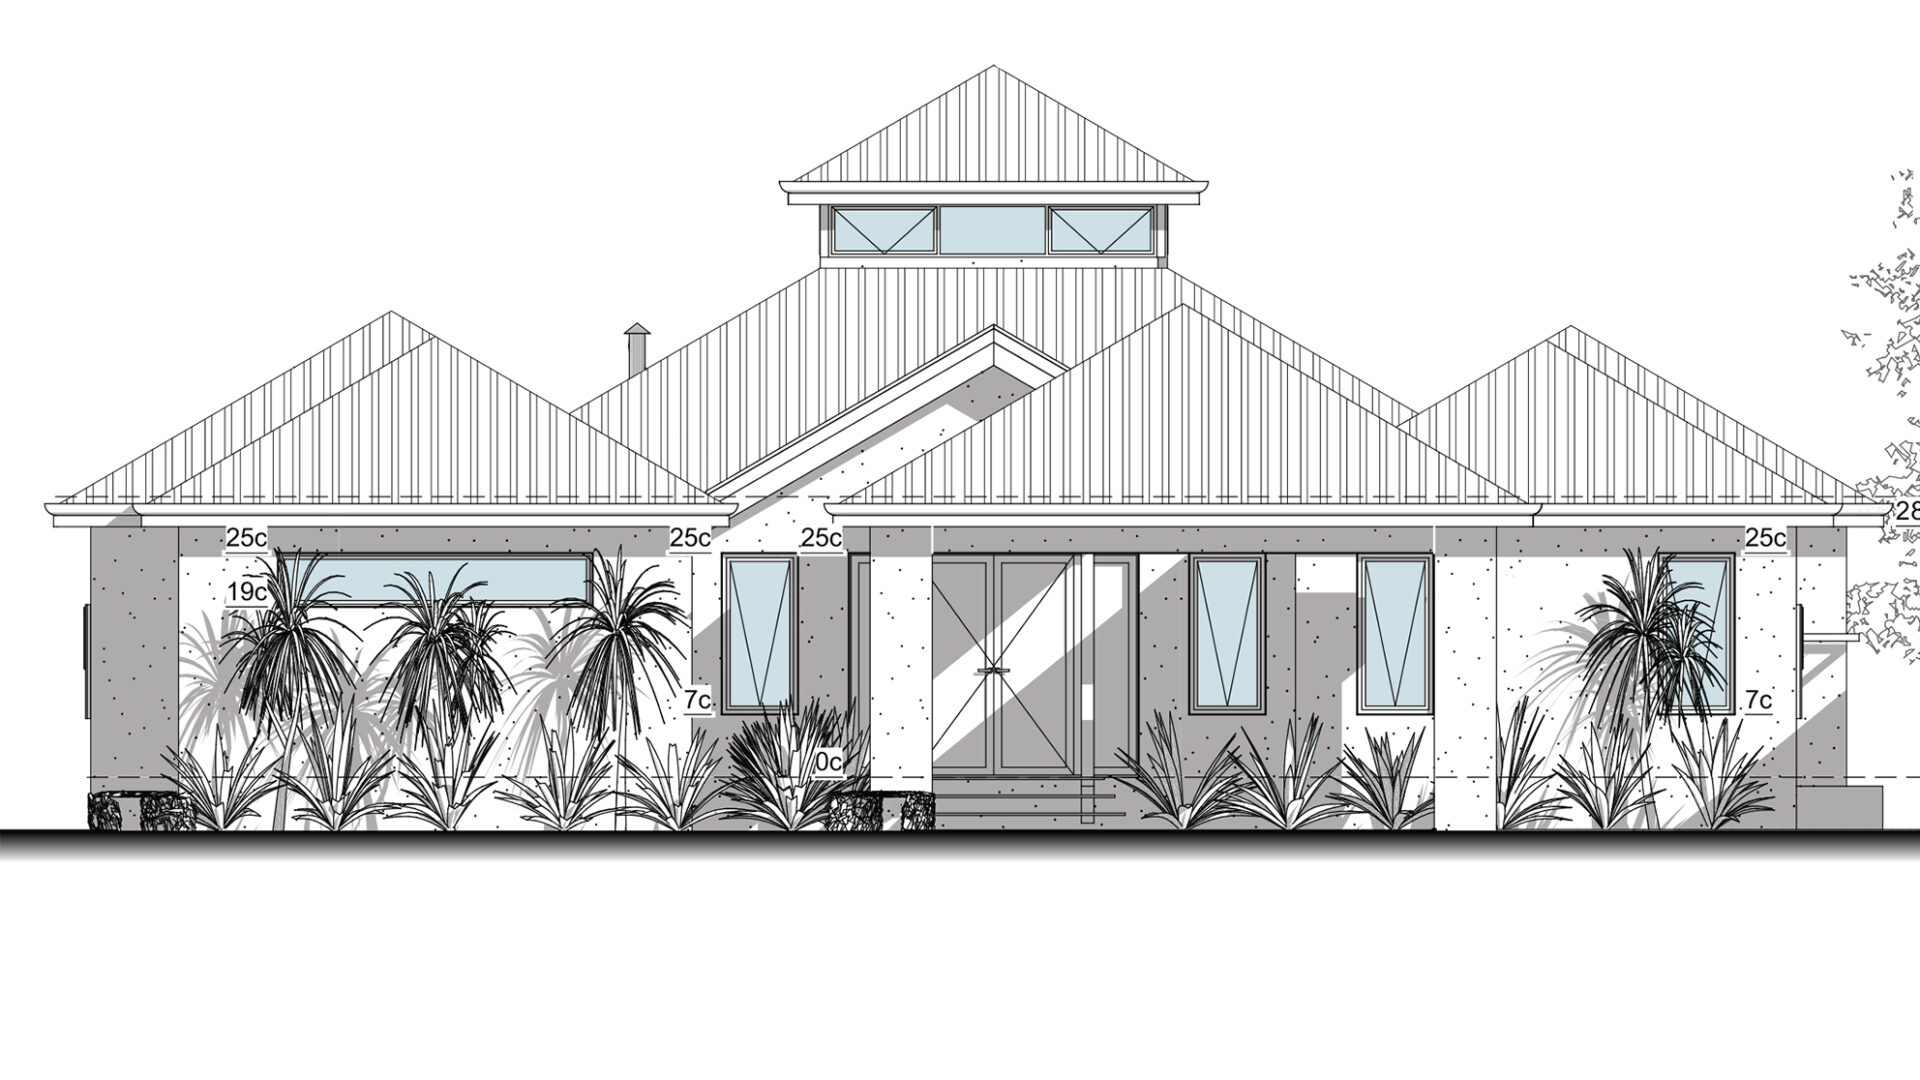 The beach house sketch